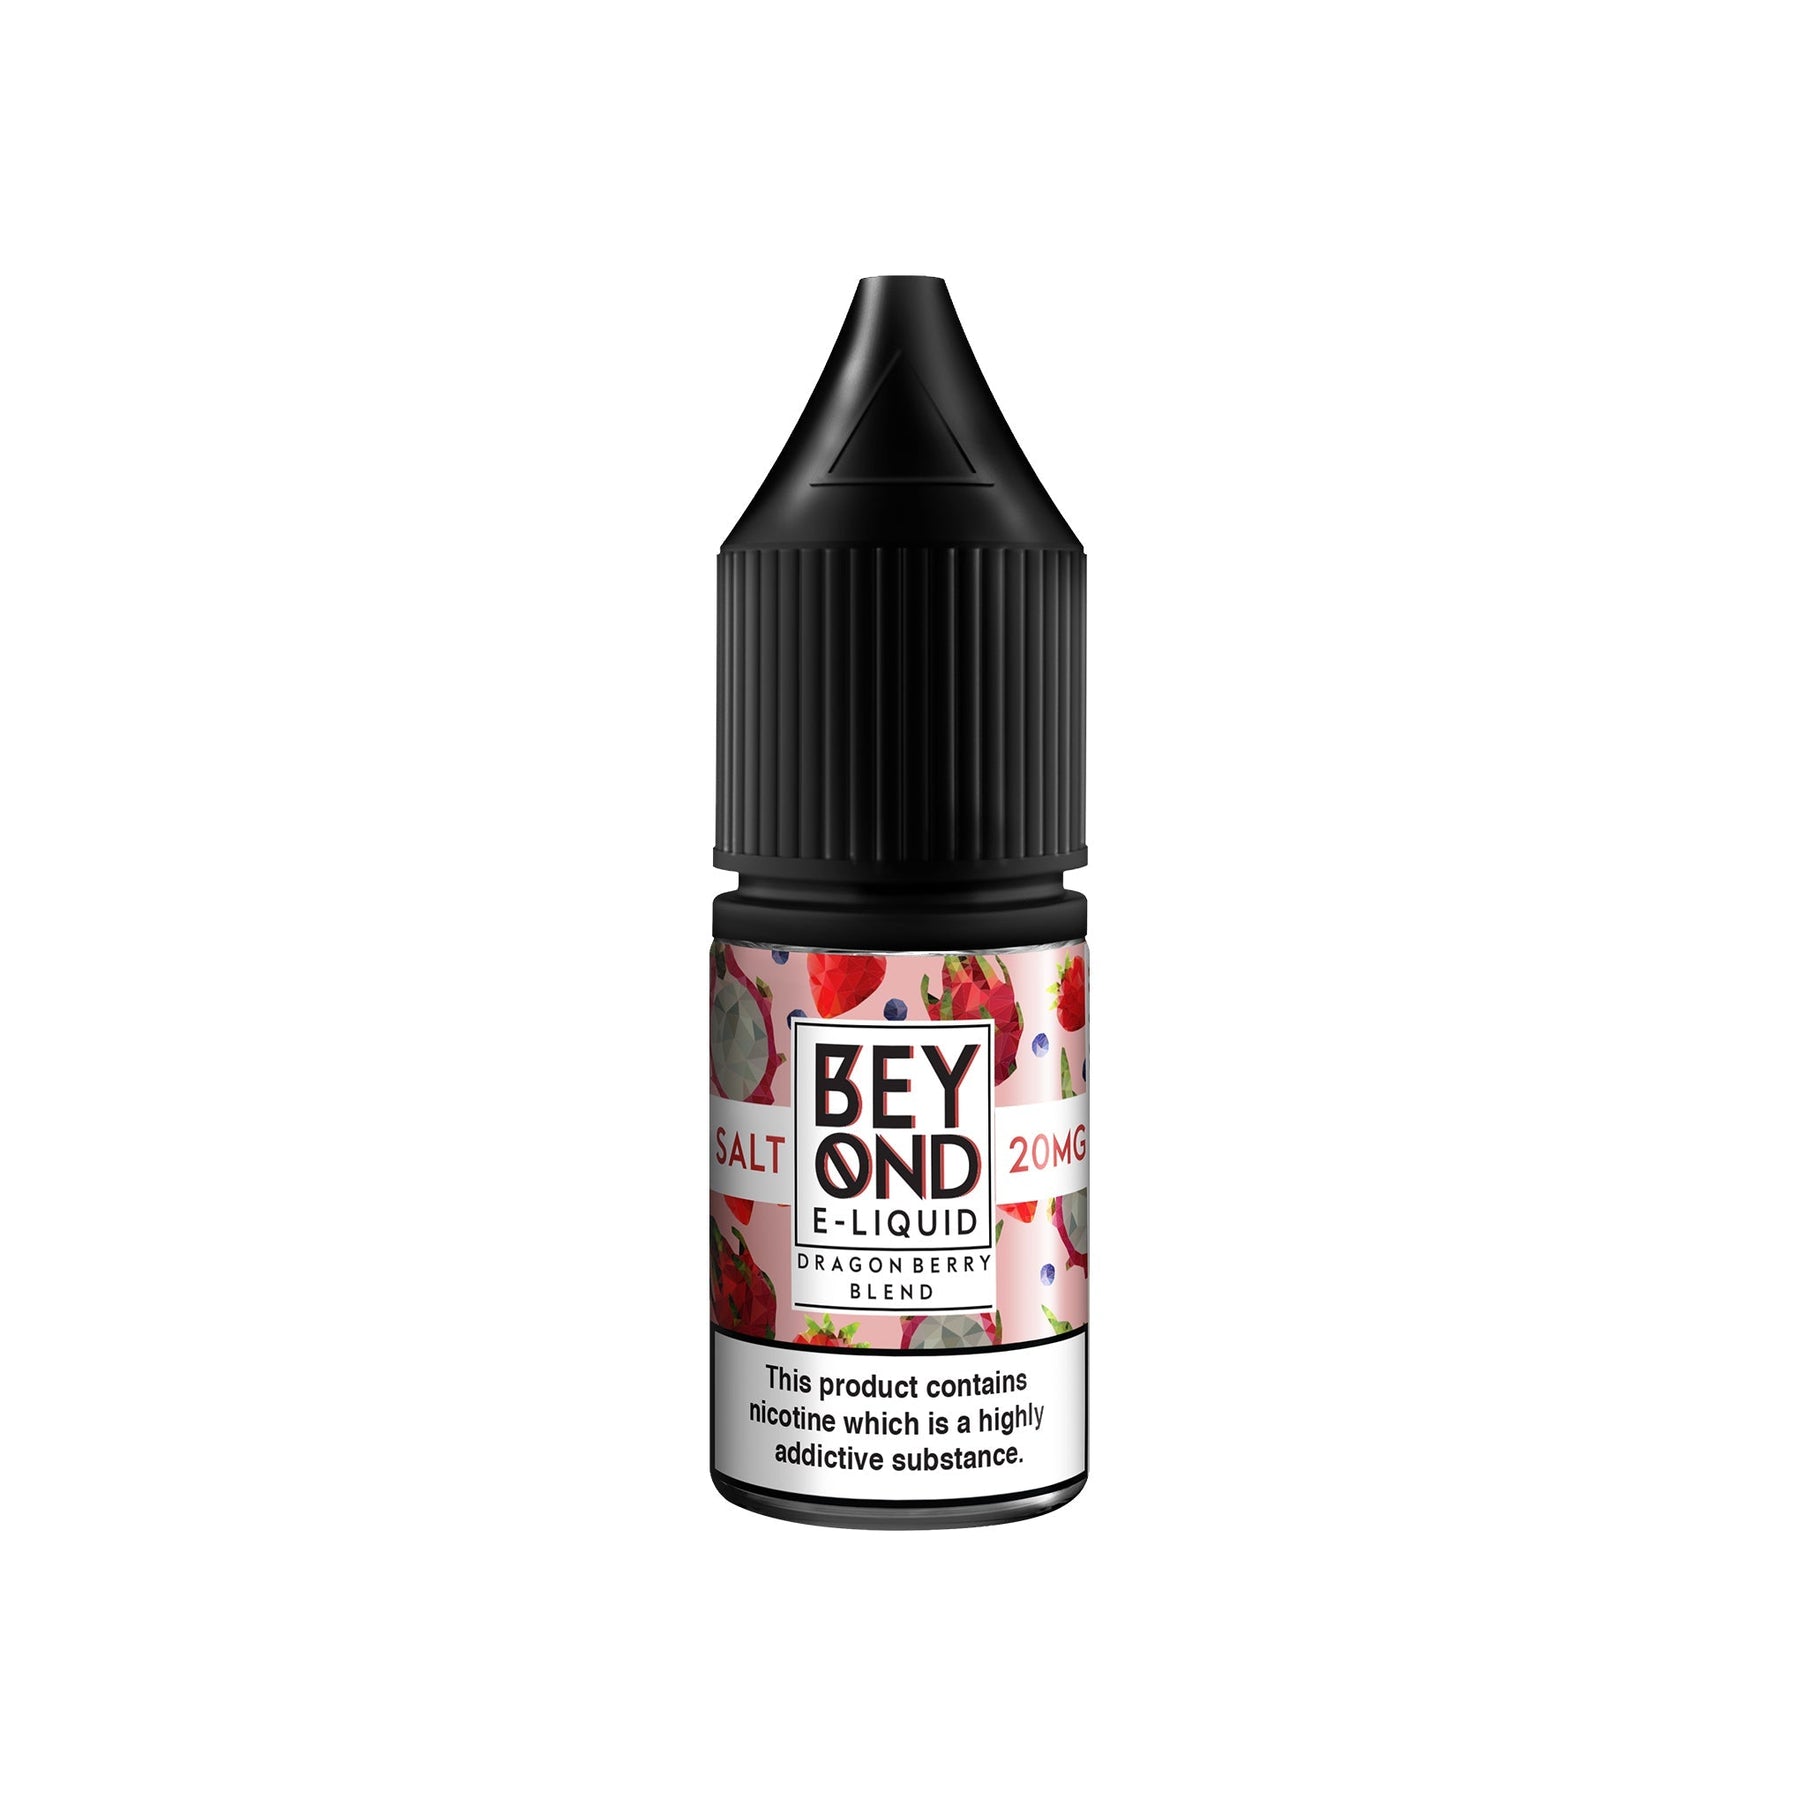 IVG Beyond Nicotine Salt E-Liquid Dragonberry Blend 